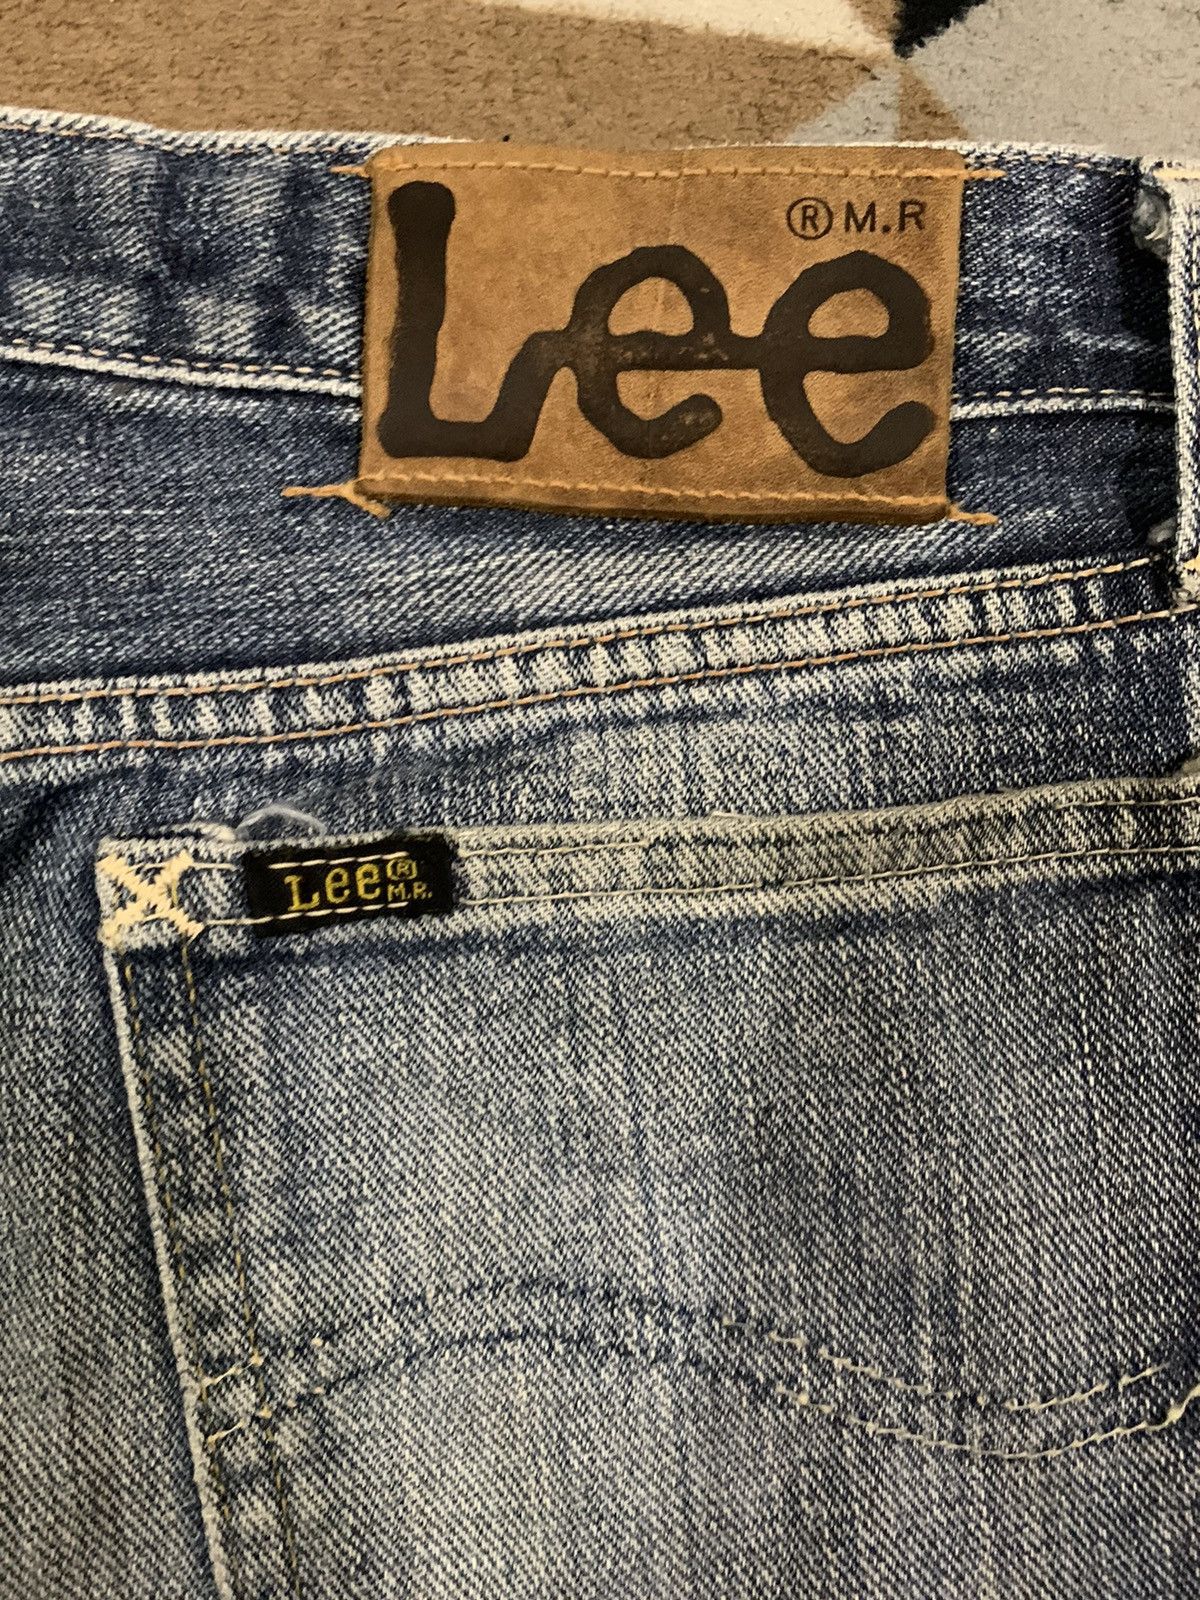 Lee Vintage Lee Cowboy Sanforized Distressed Flared Jeans Size US 31 - 14 Thumbnail